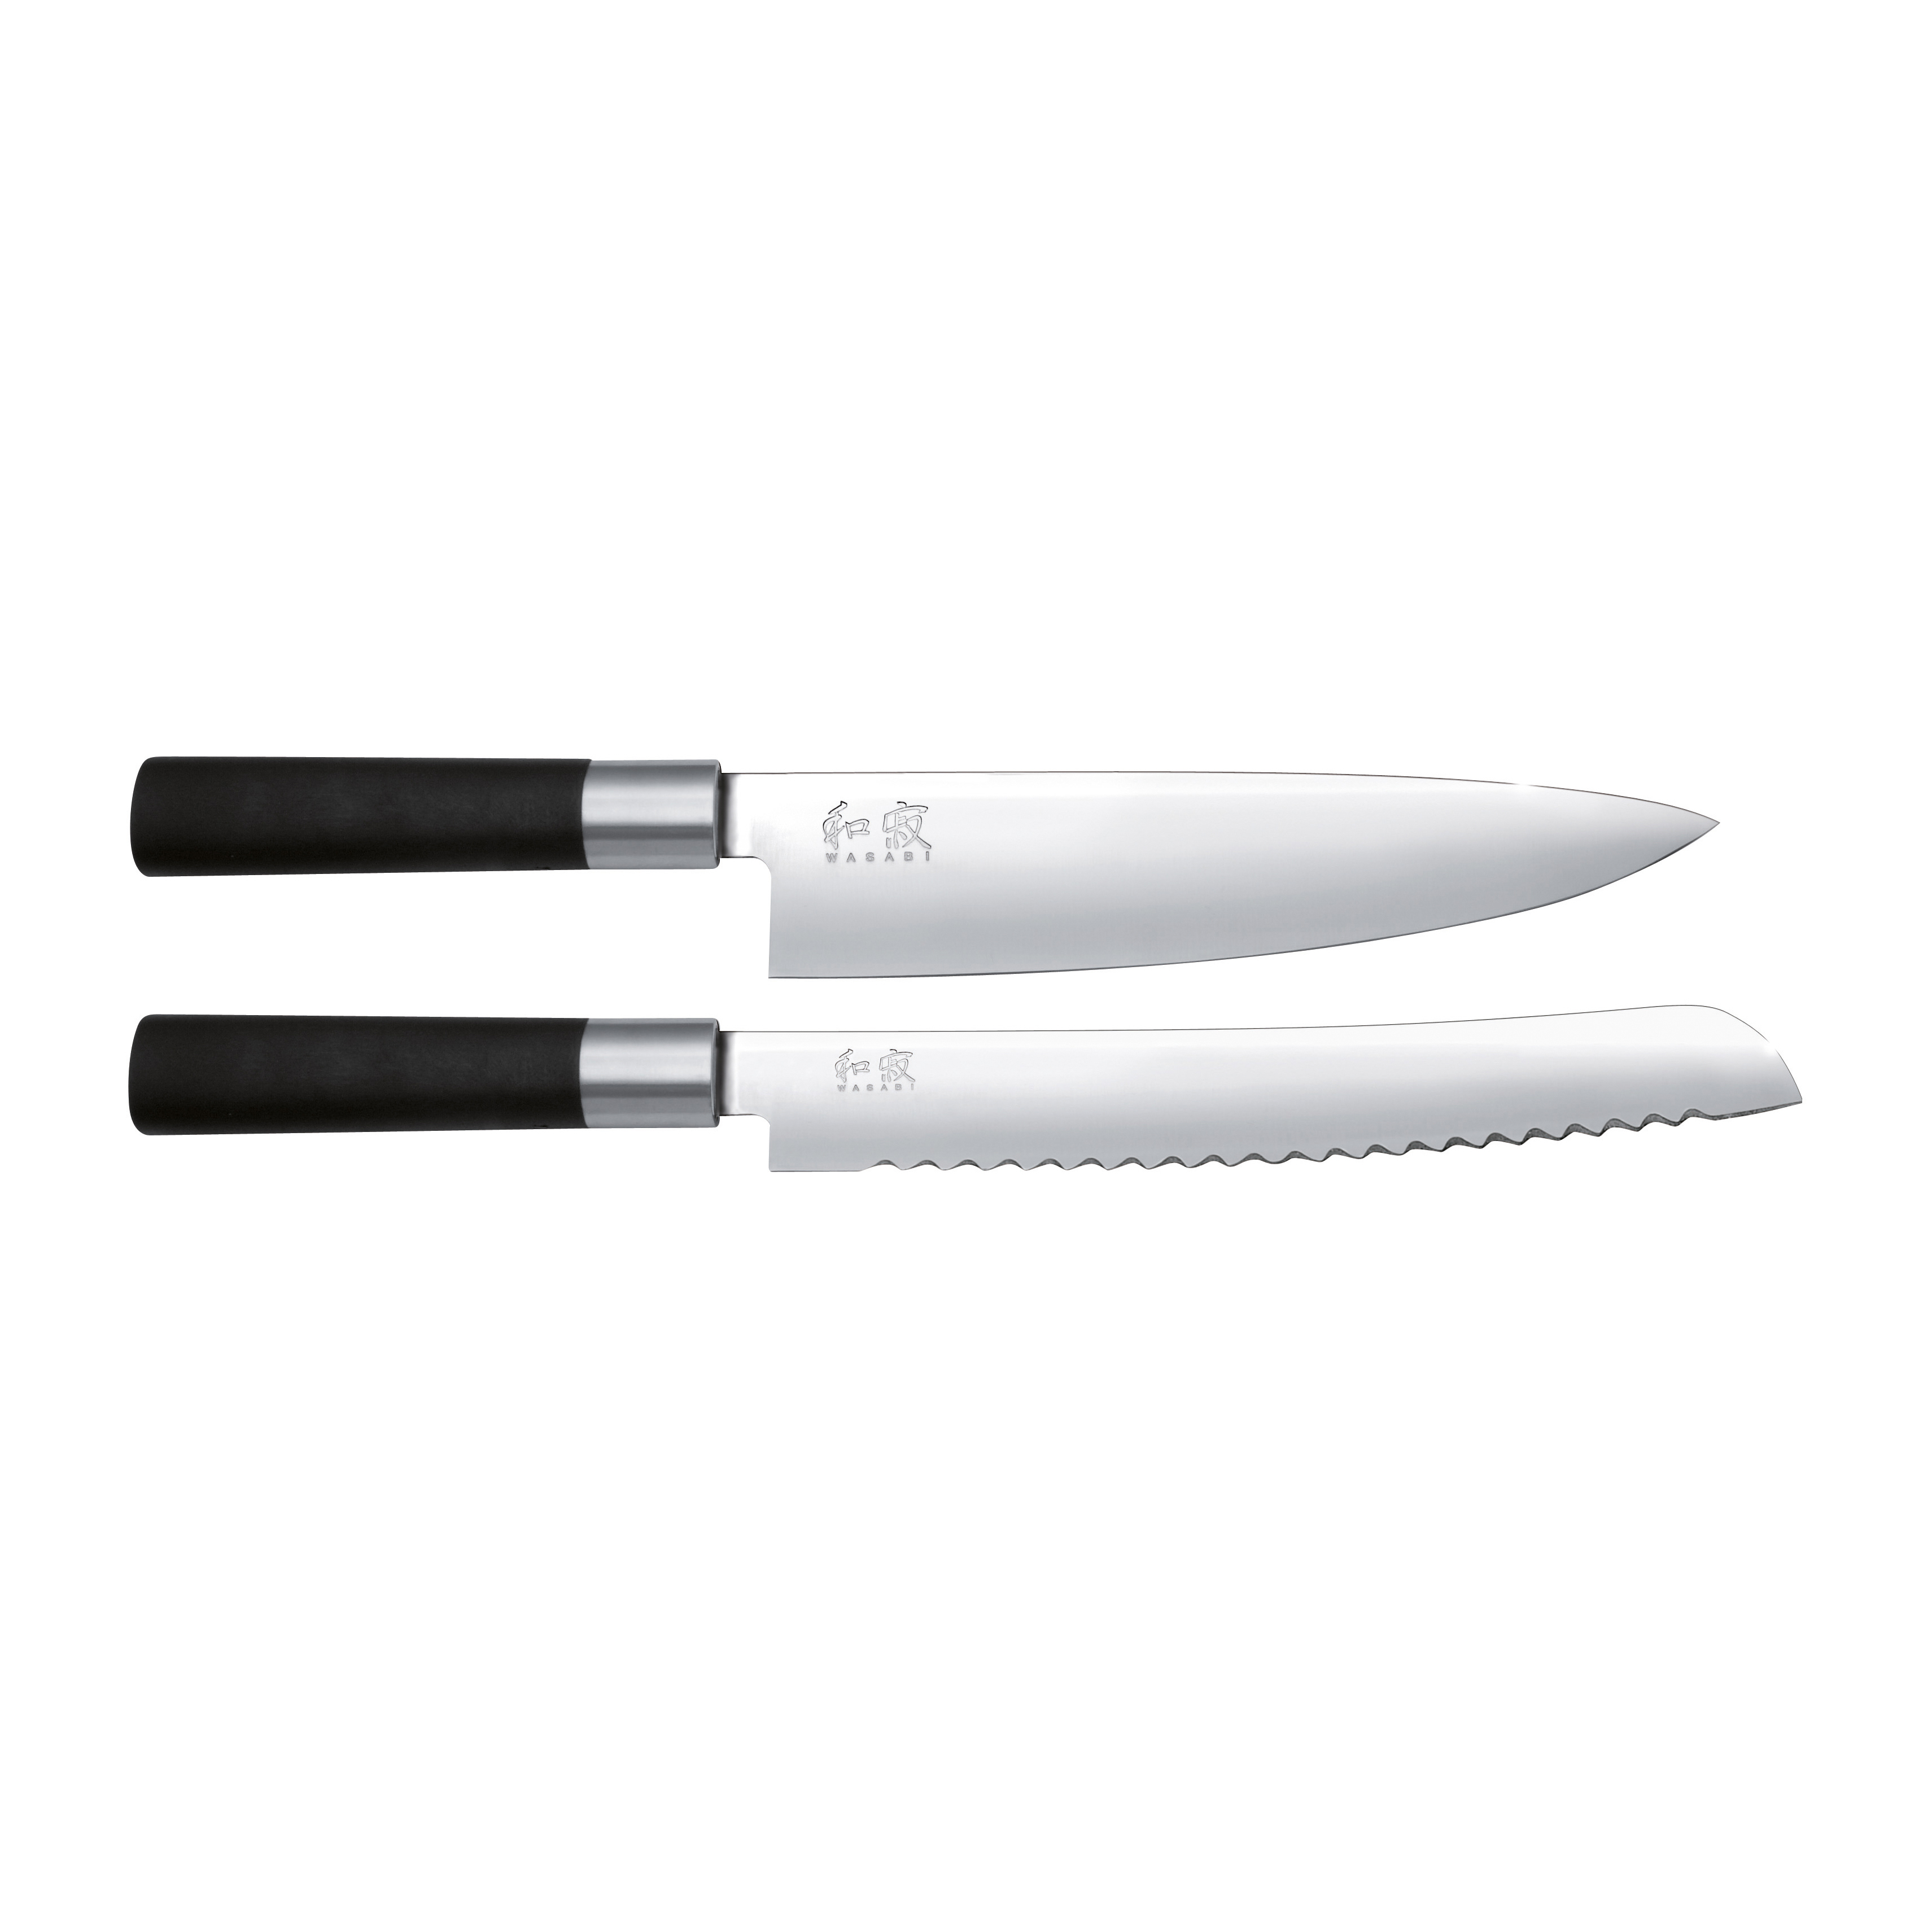 https://www.nordicnest.com/assets/blobs/kai-kai-wasabi-black-bread-kitchen-knife-set-2-pieces/502391-01_1_ProductImageMain-e02d5dd061.jpg